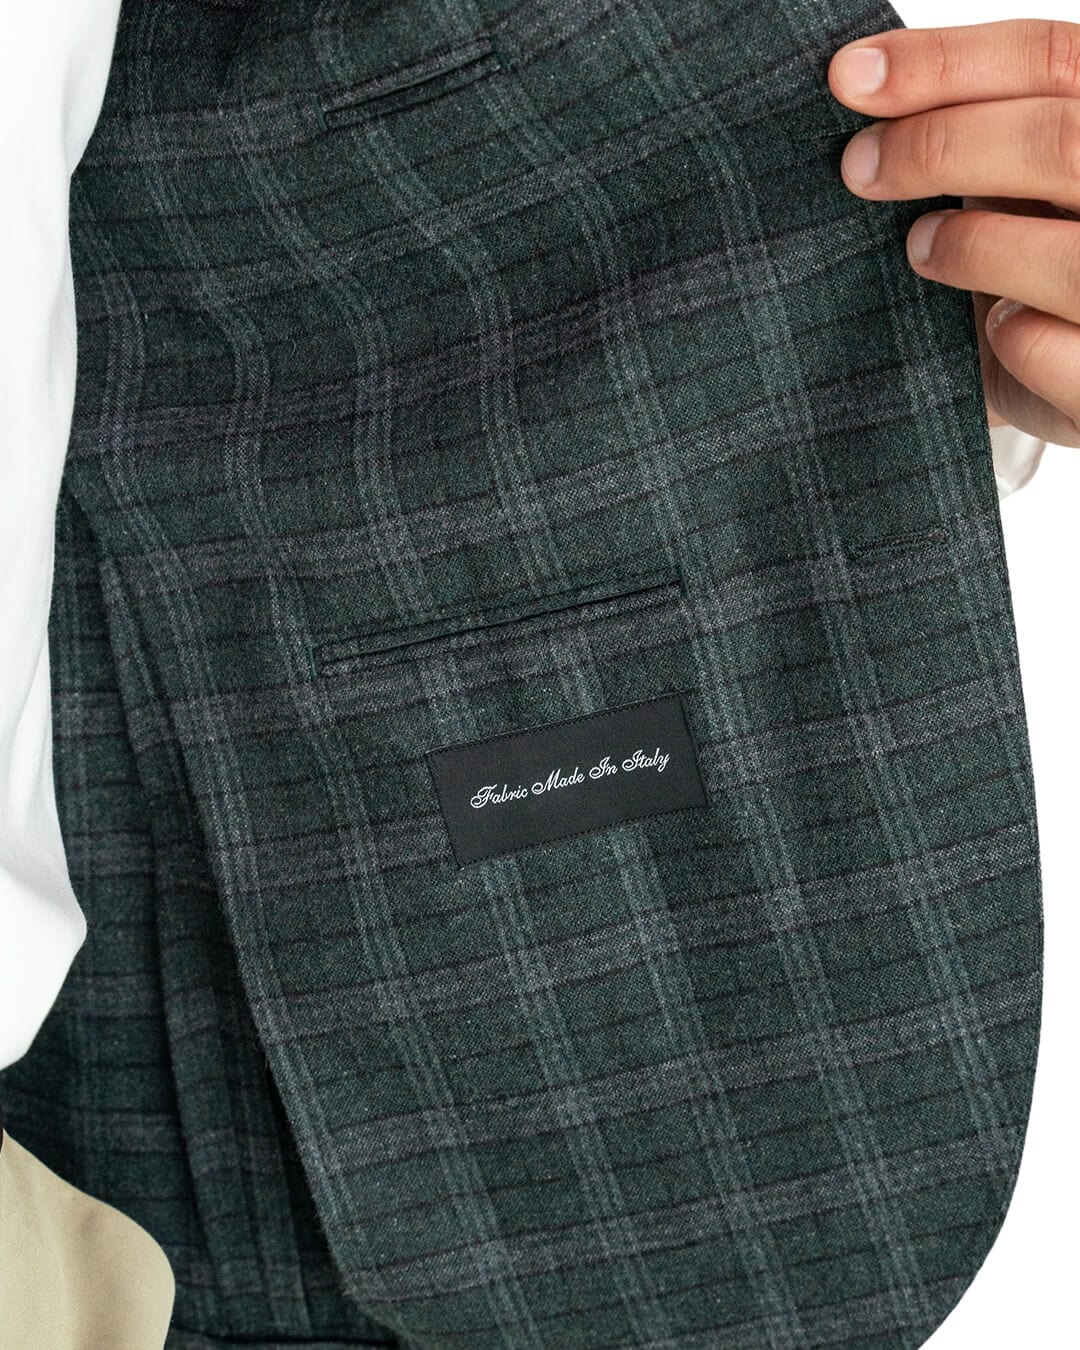 Gagliardi Jackets Gagliardi Green Italian Flannel Check Jacket